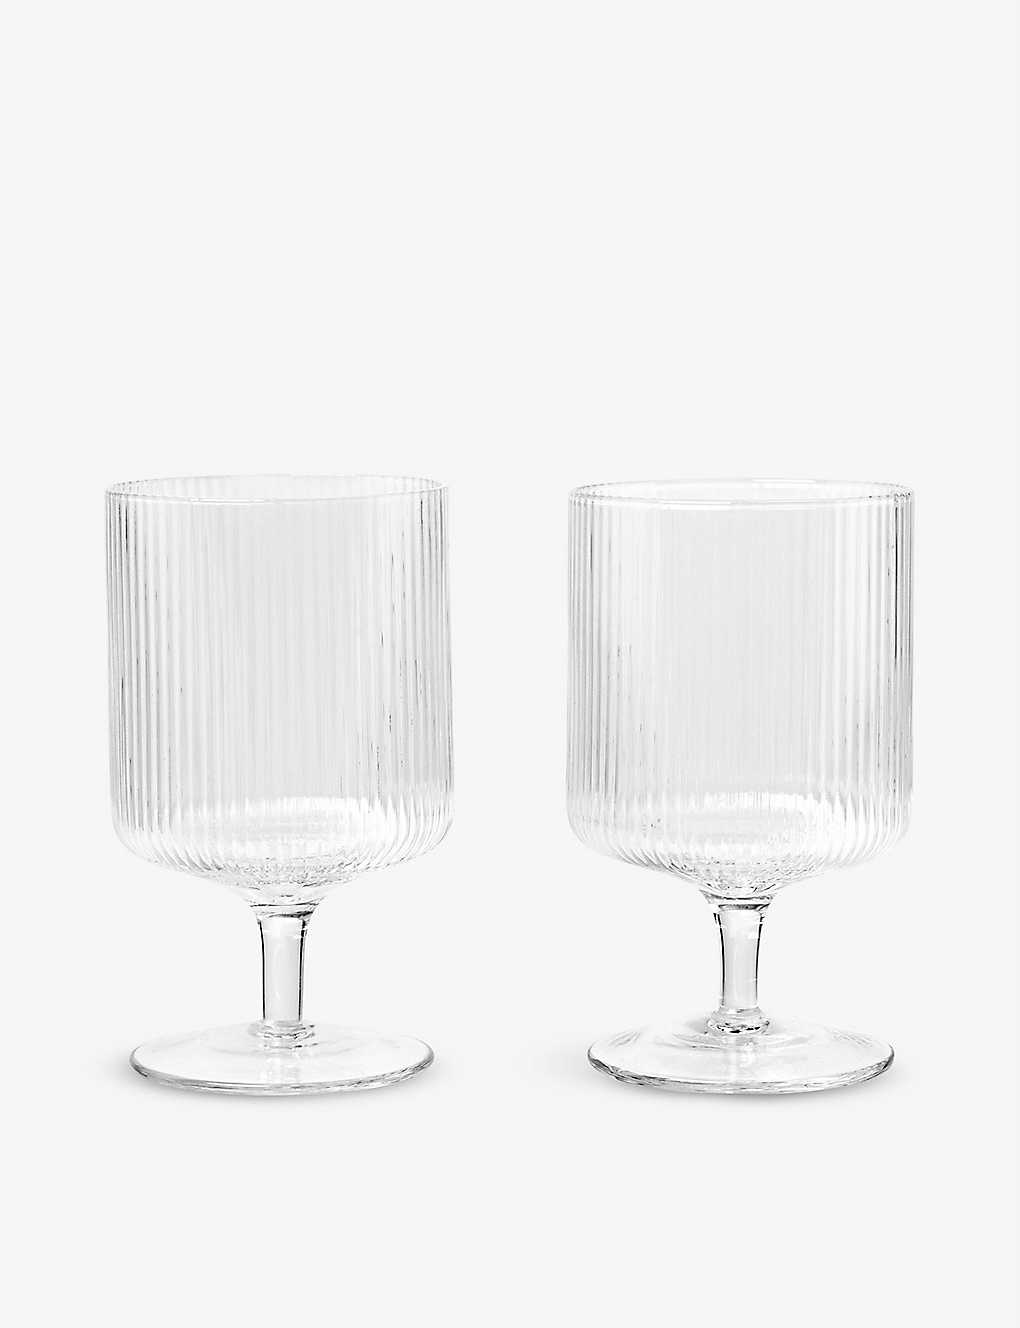 FERM LIVING リップルグラス ワイングラス 2個セット Ripple glass wine glasses set of two